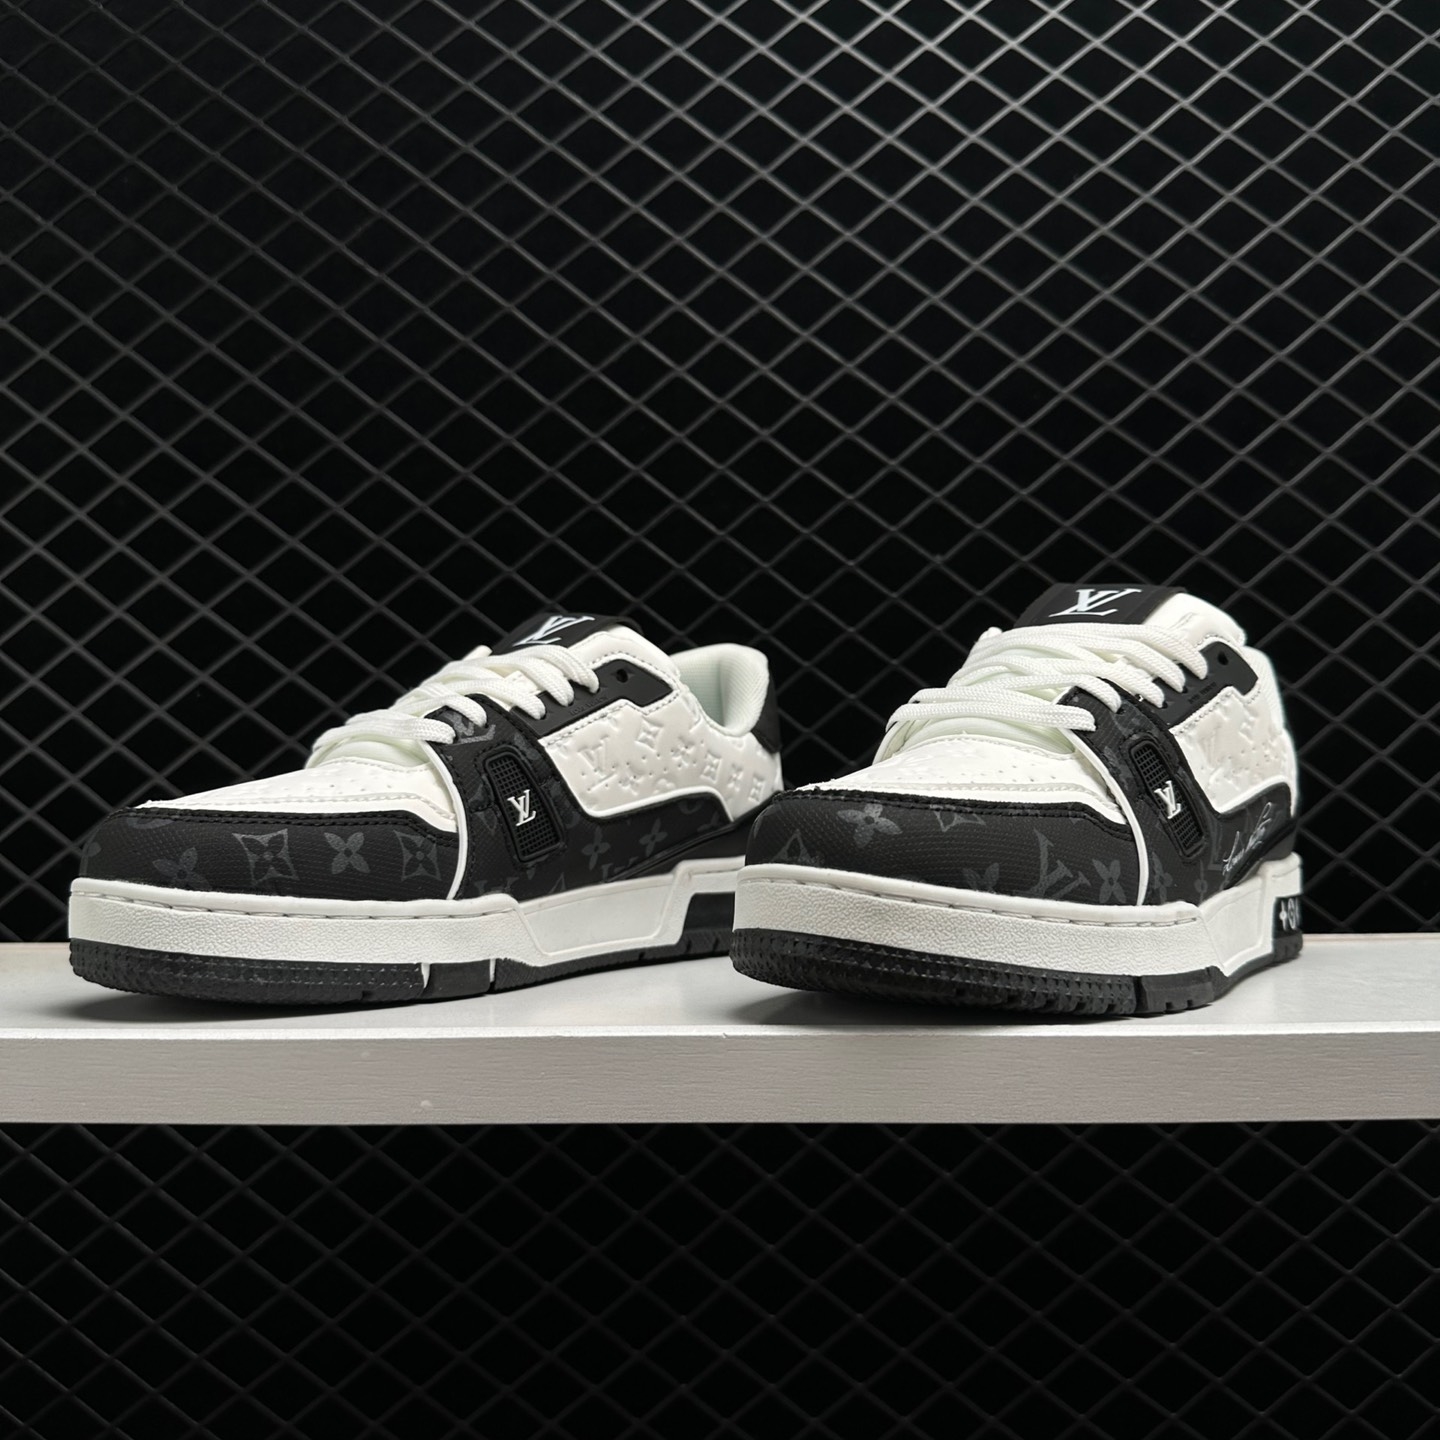 Shop the Sleek and Stylish Louis Vuitton LV Trainer #54 Black White 1AANEG